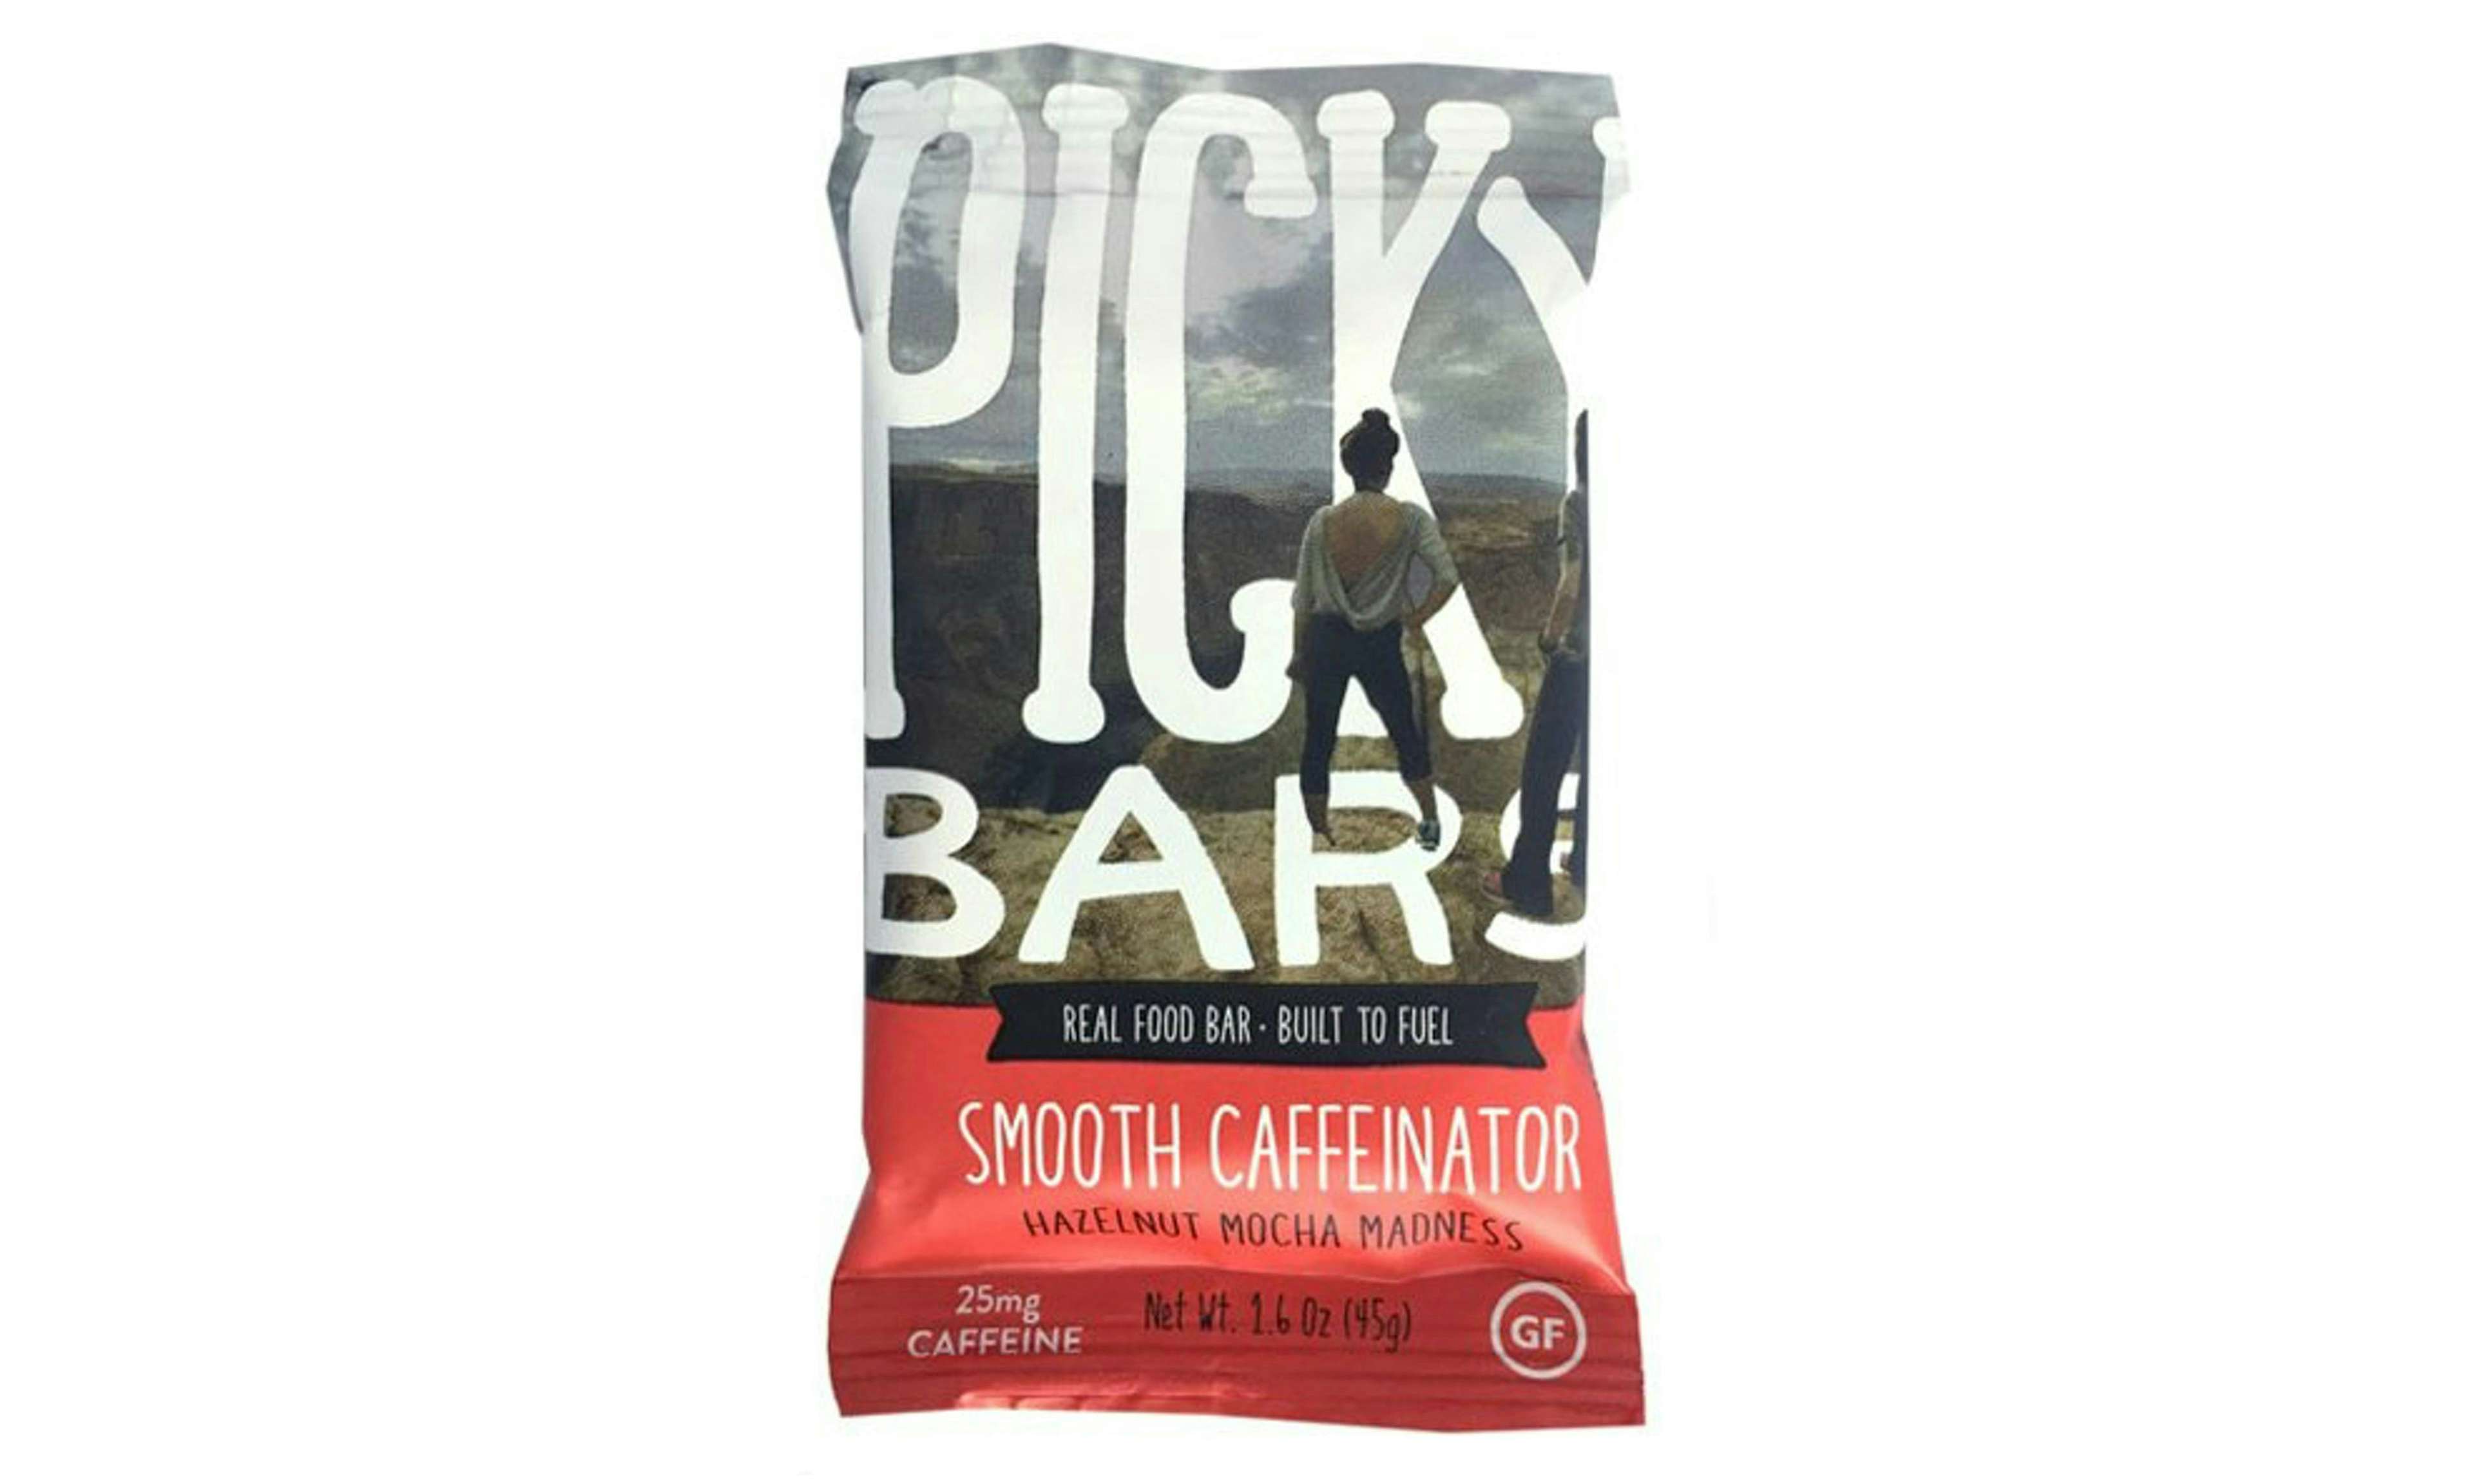 Picky Bar smooth caffeinator